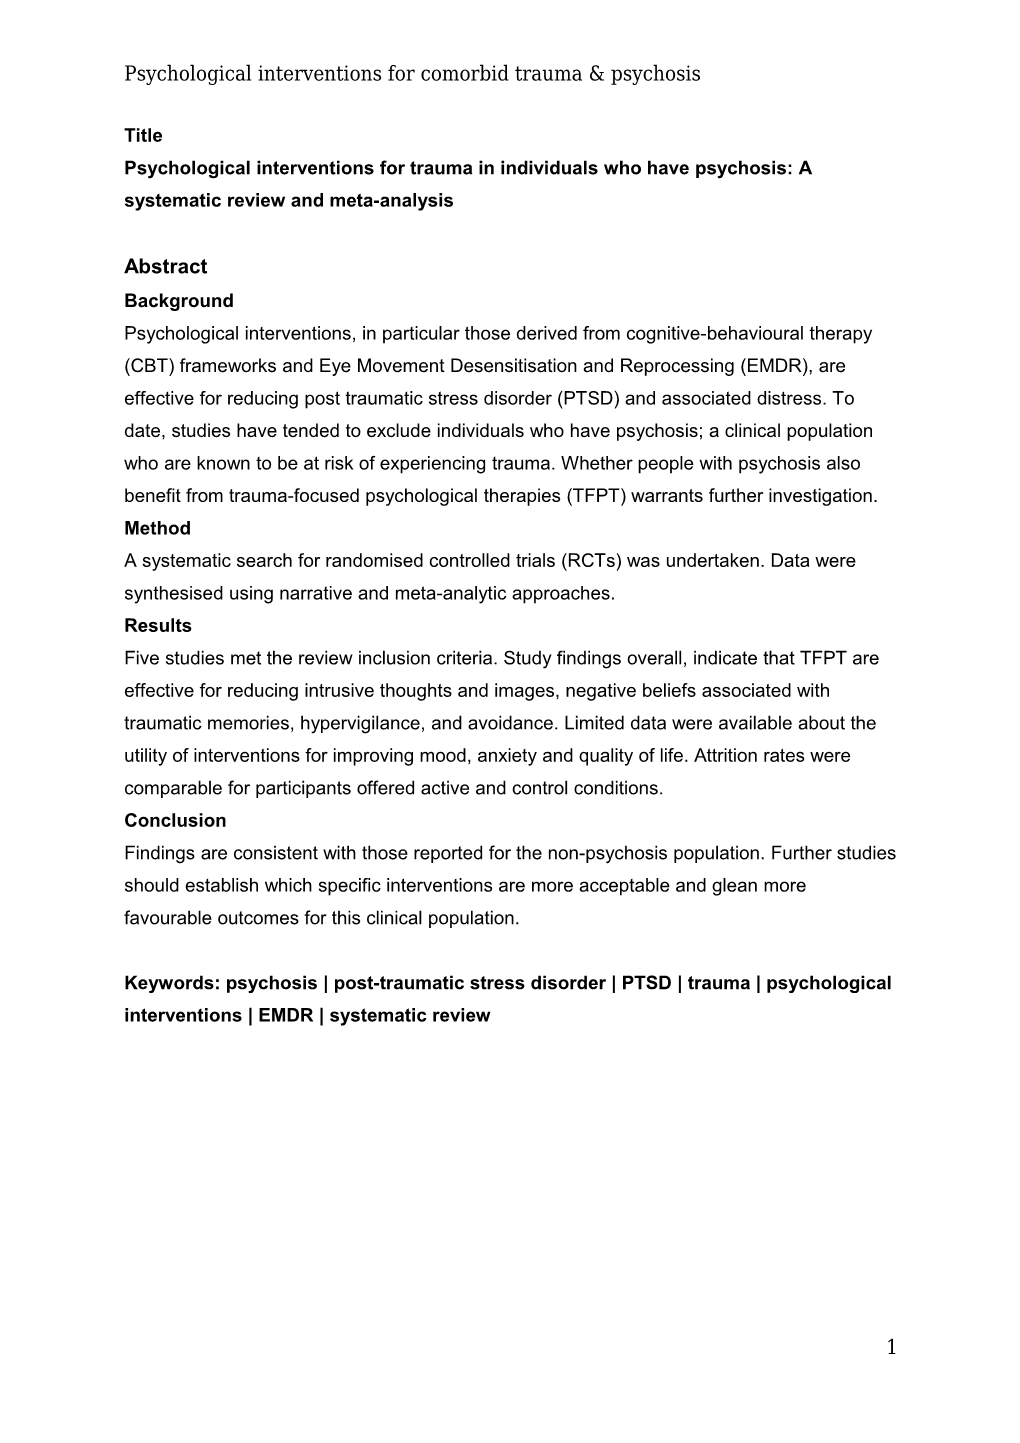 Psychological Interventions for Comorbid Trauma & Psychosis